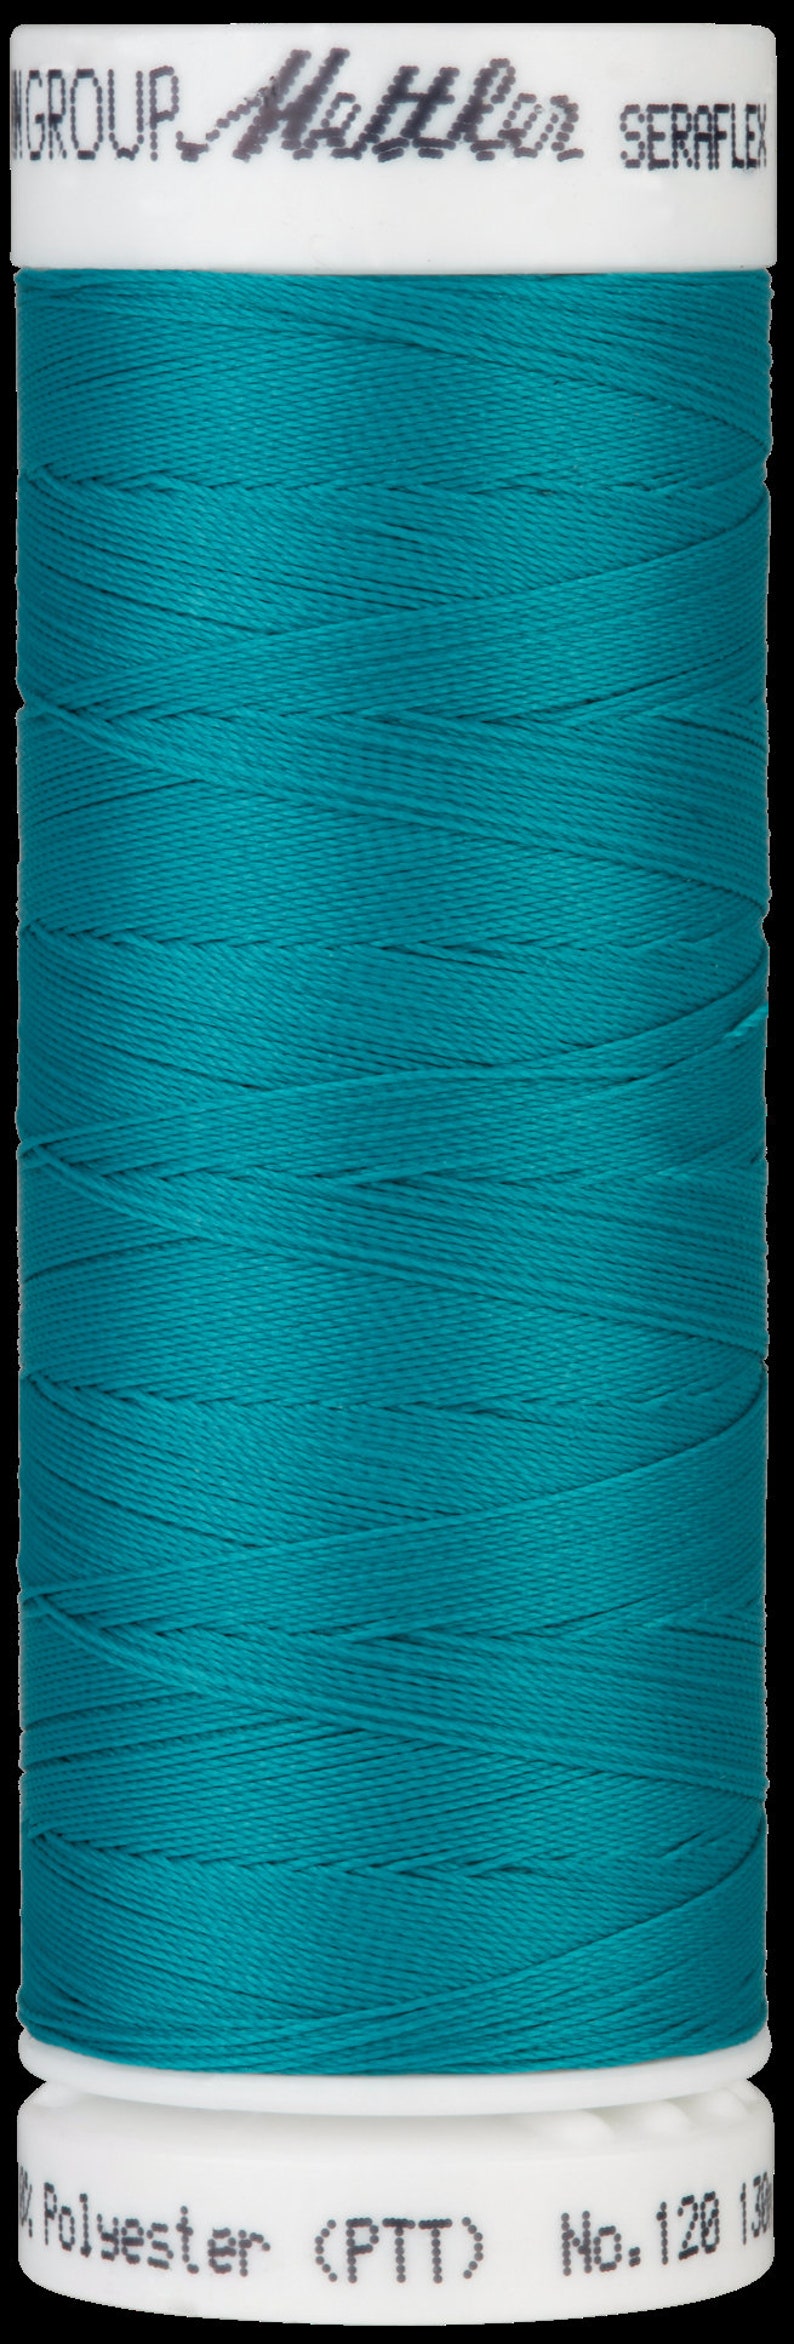 NEUE Farben Seraflex 120 flexibler Faden Nähfaden blau türkis grün braun Mettler truly teal